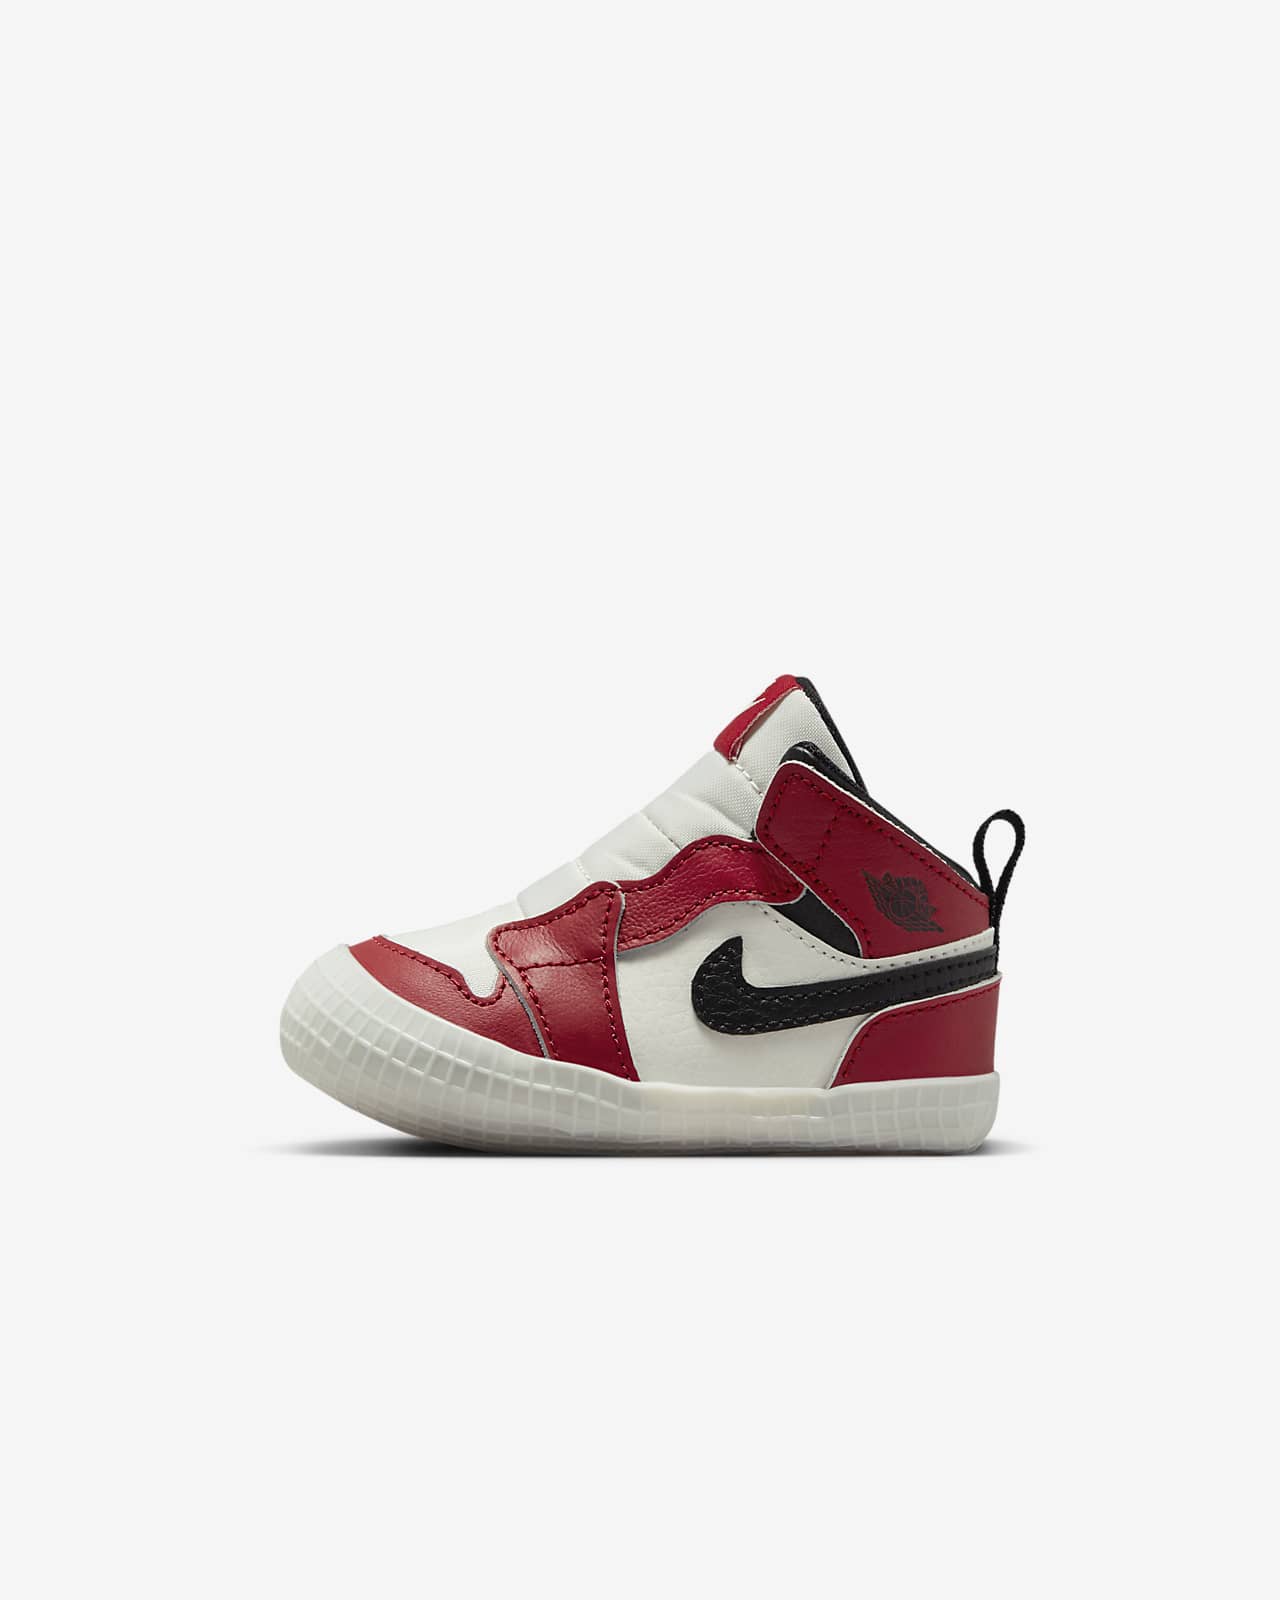 Jordan 1 Baby Cot Bootie. Nike SG